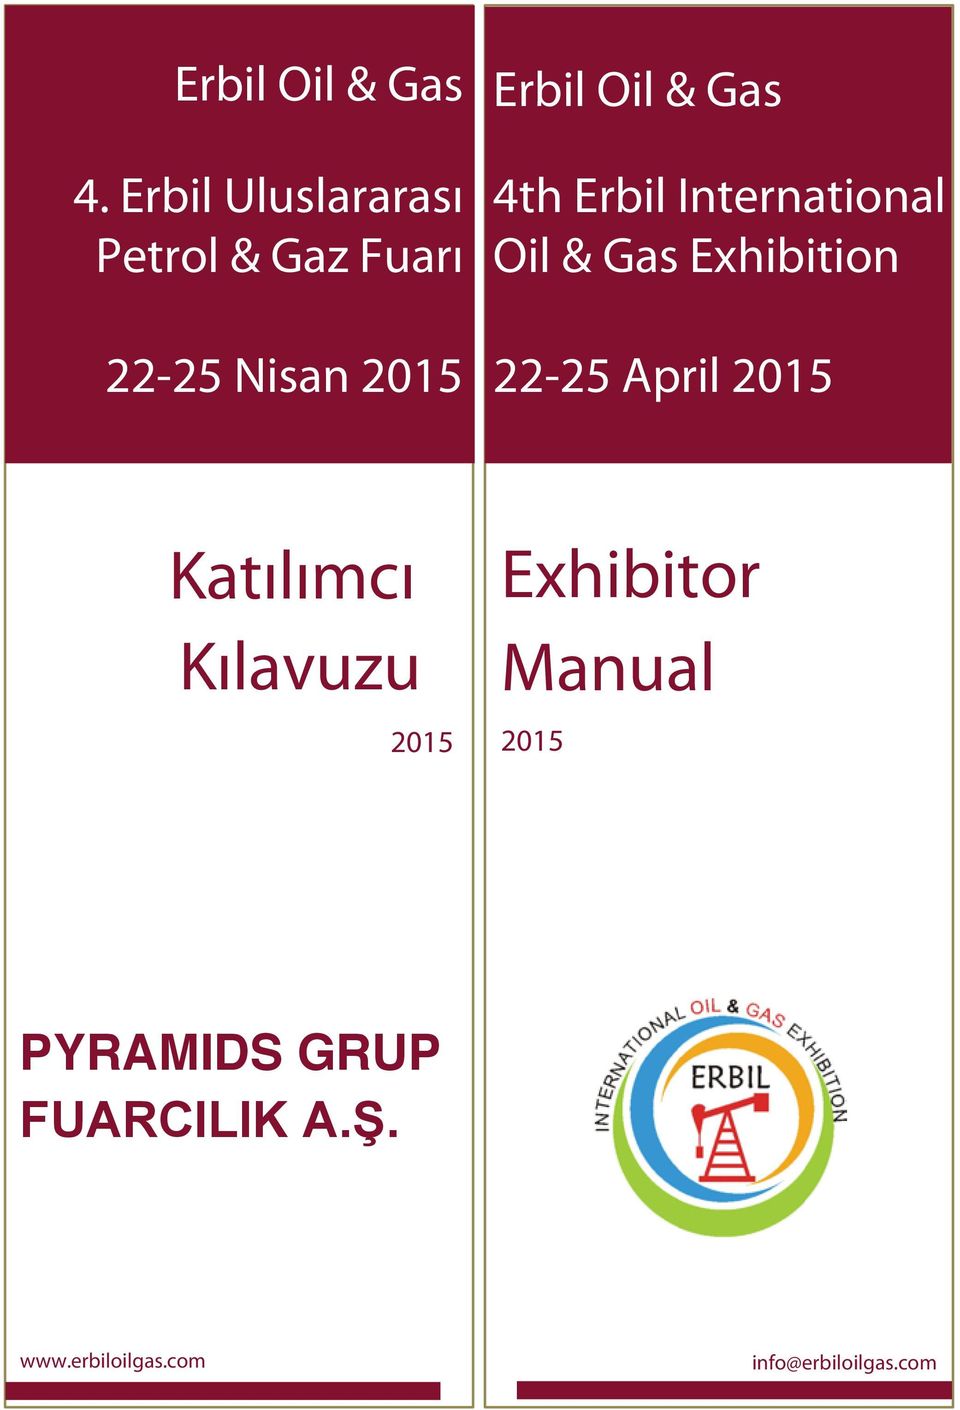 4th Erbil International Oil & Gas Exhibition 22-25 April 2015